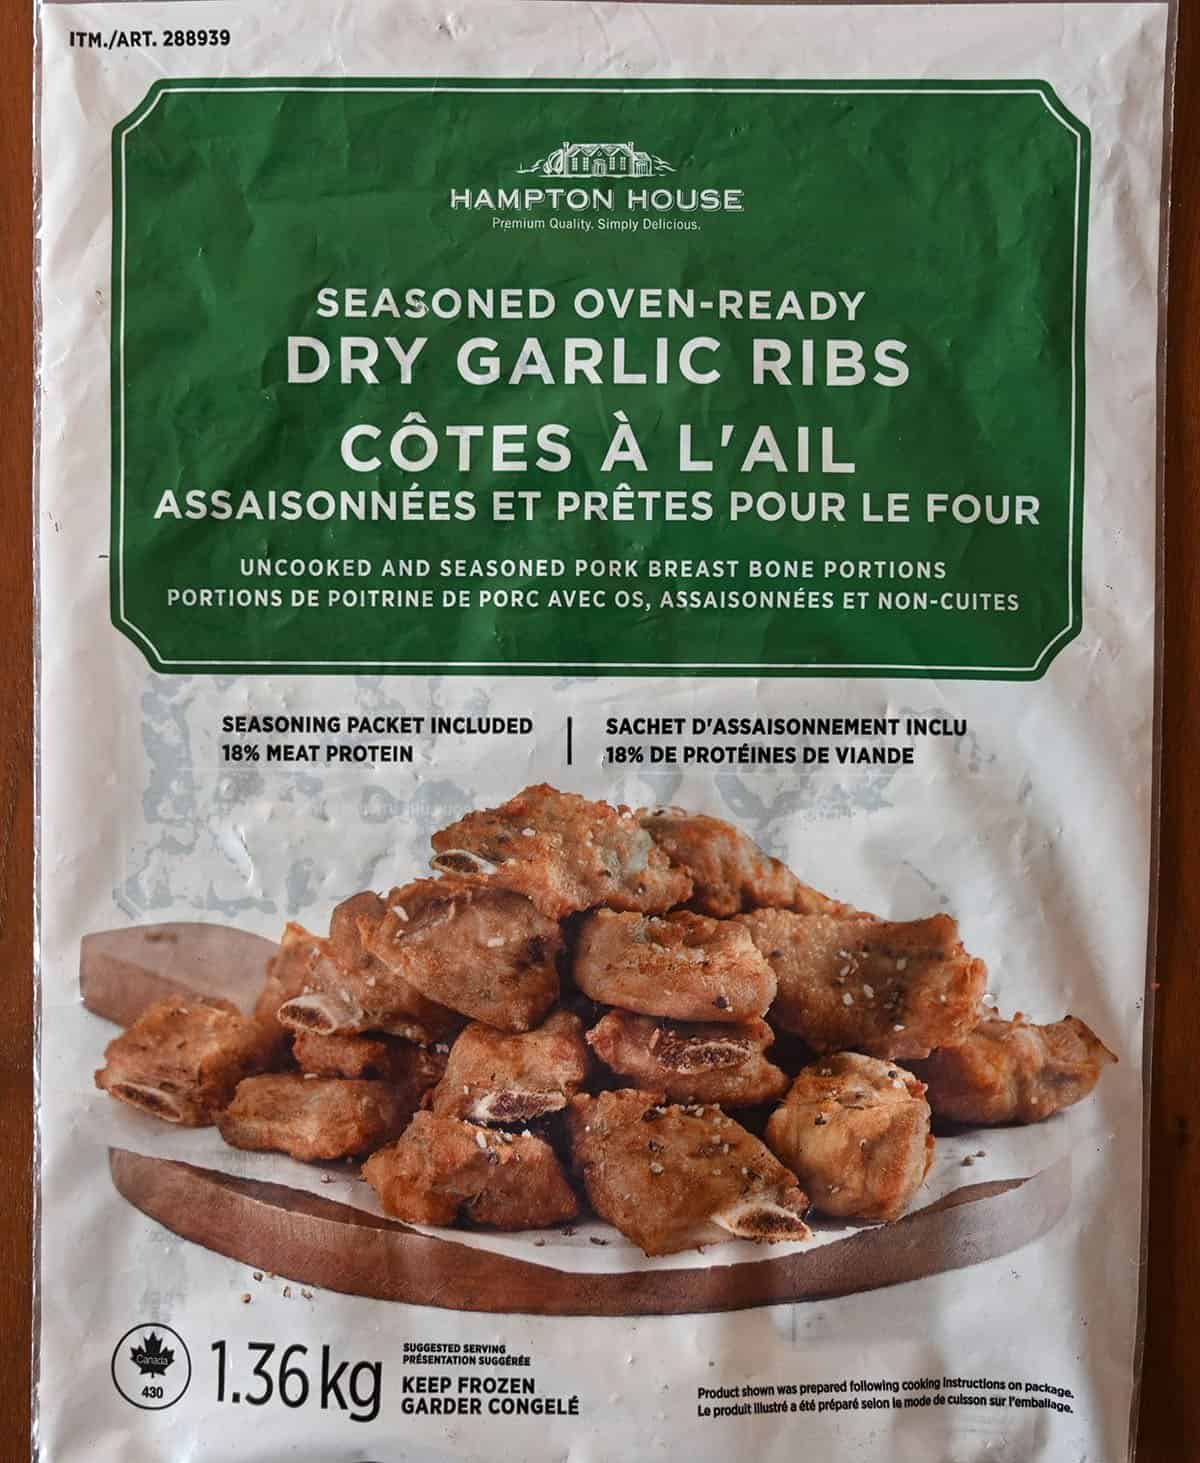 Close up image of the Costco Hampton House Dry Garlic Ribs bag. 